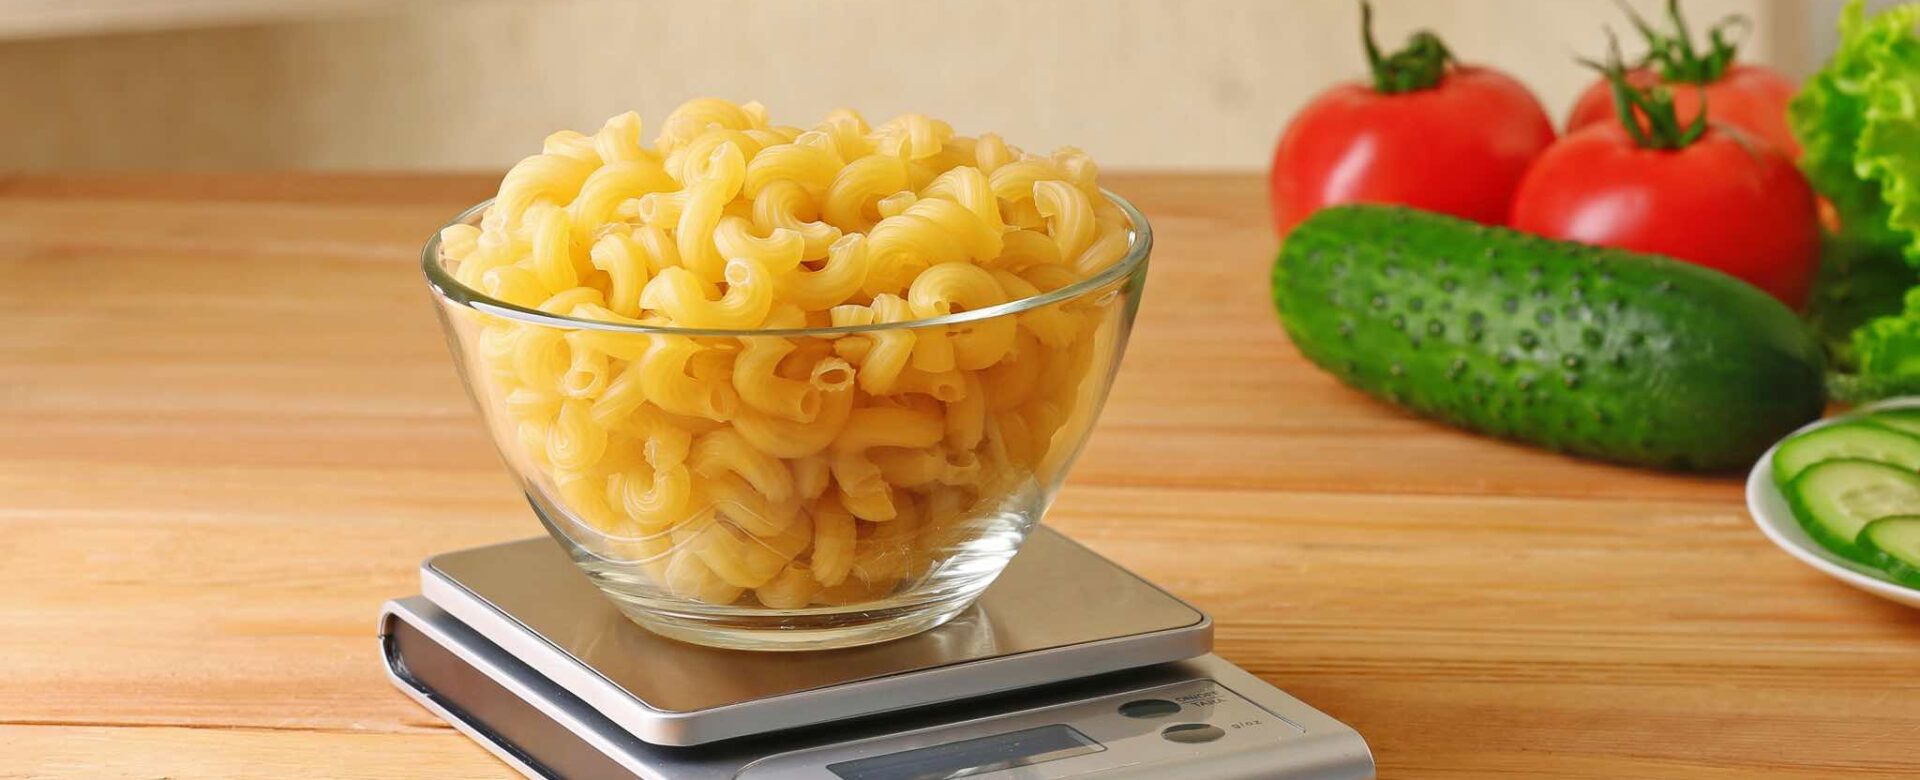 Hoeveel macaroni kook je per persoon